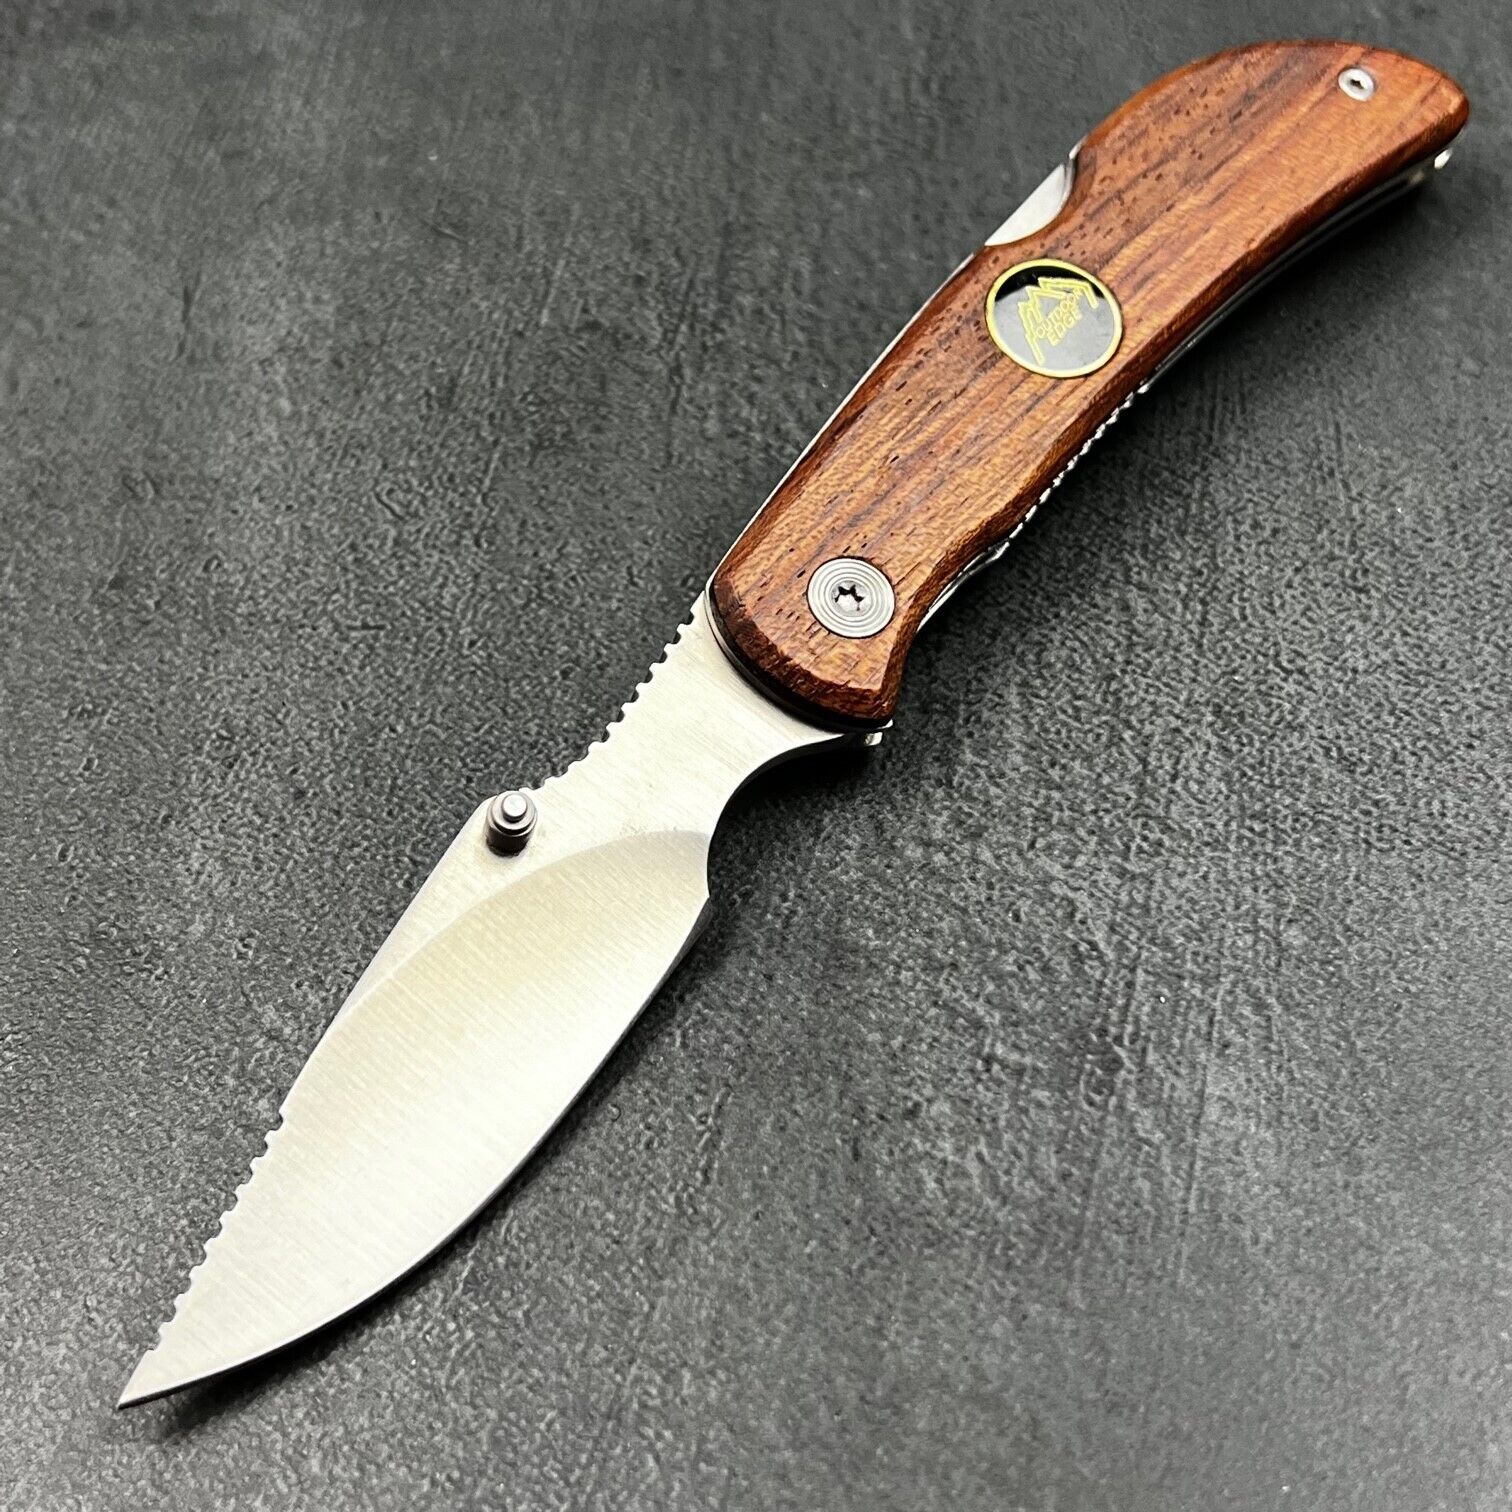 Outdoor Edge Caper Lite Lockback Brown Wood Handles EDC Folding Pocket Knife NEW